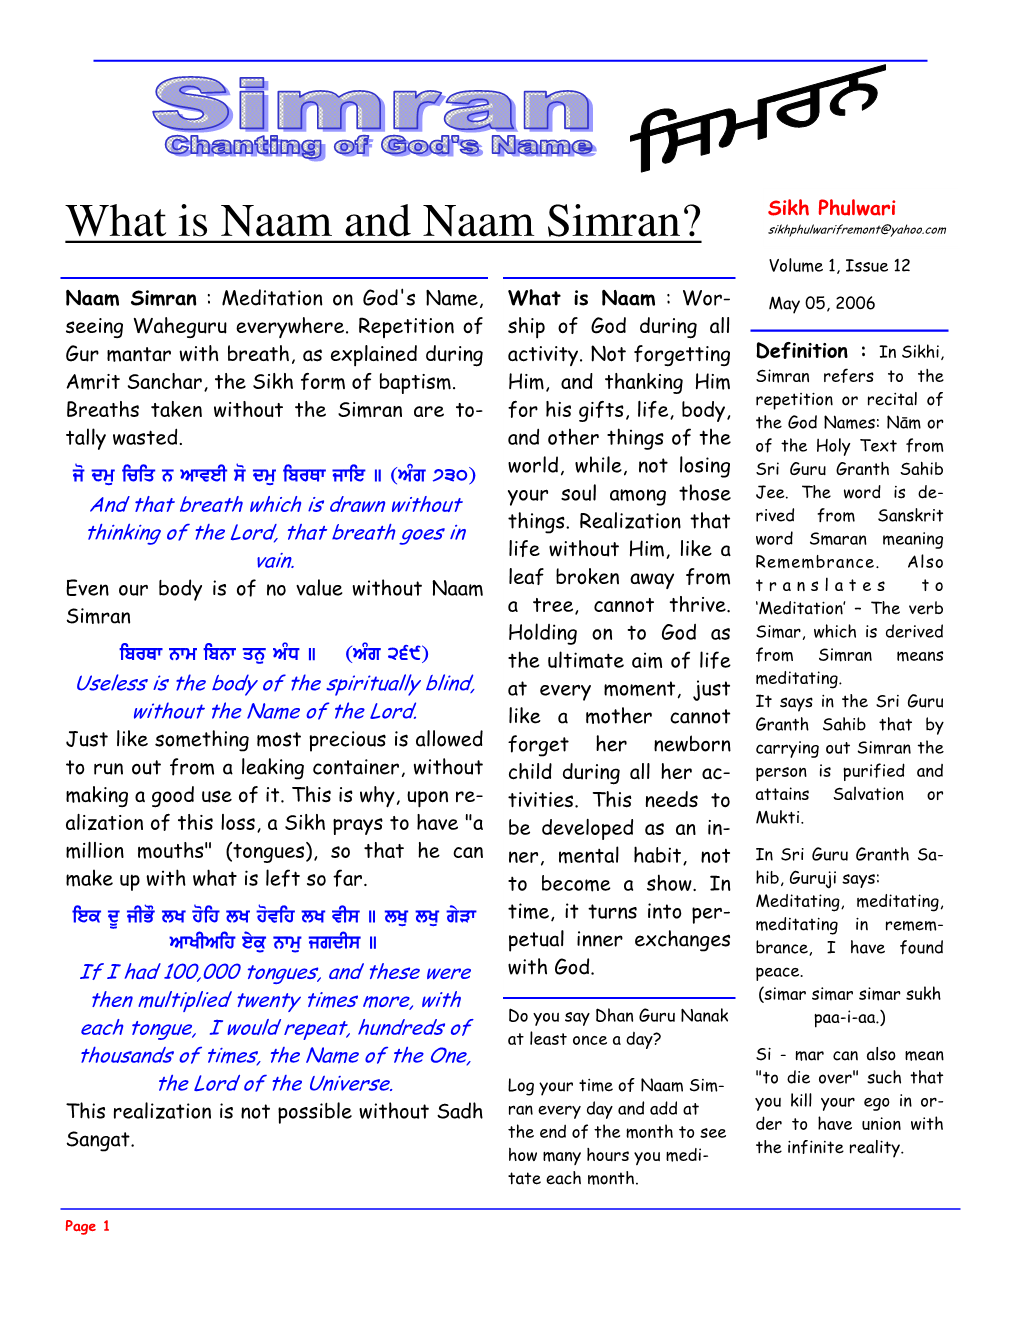 What Is Naam and Naam Simran? Sikhphulwarifremont@Yahoo.Com